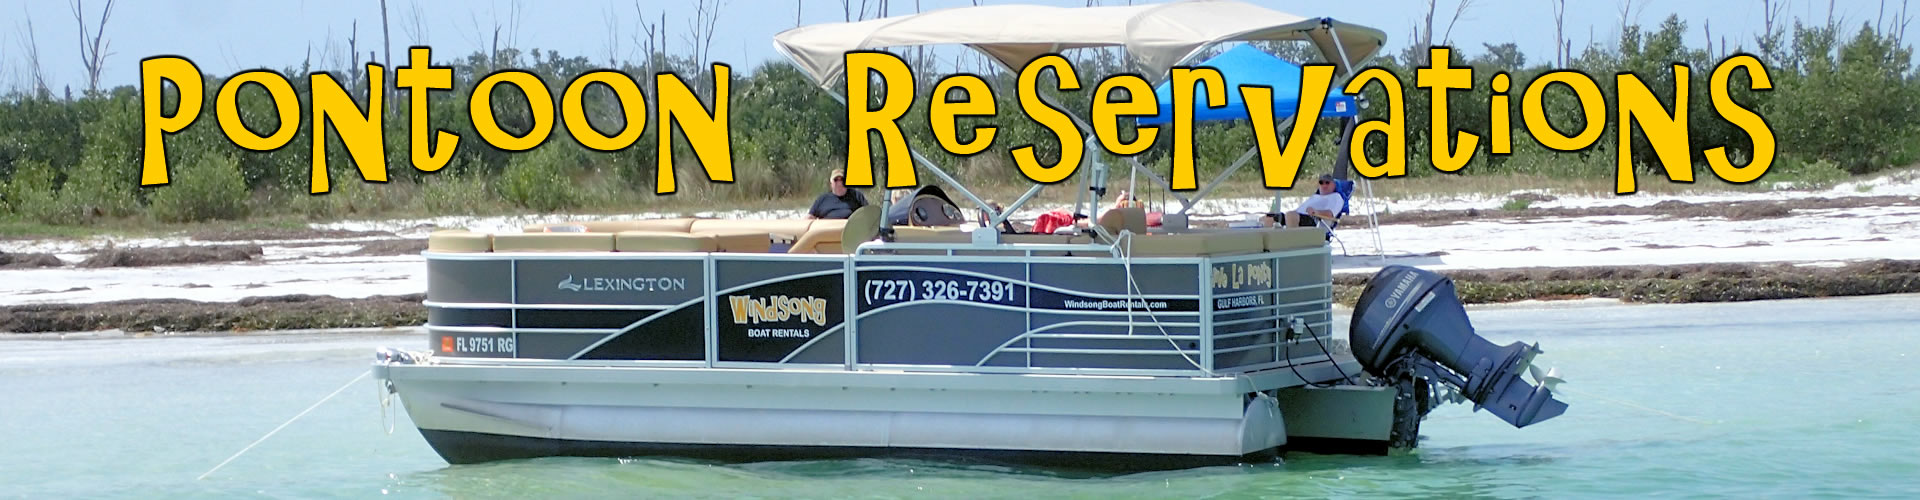 Boat Rental Reservations, Tampa